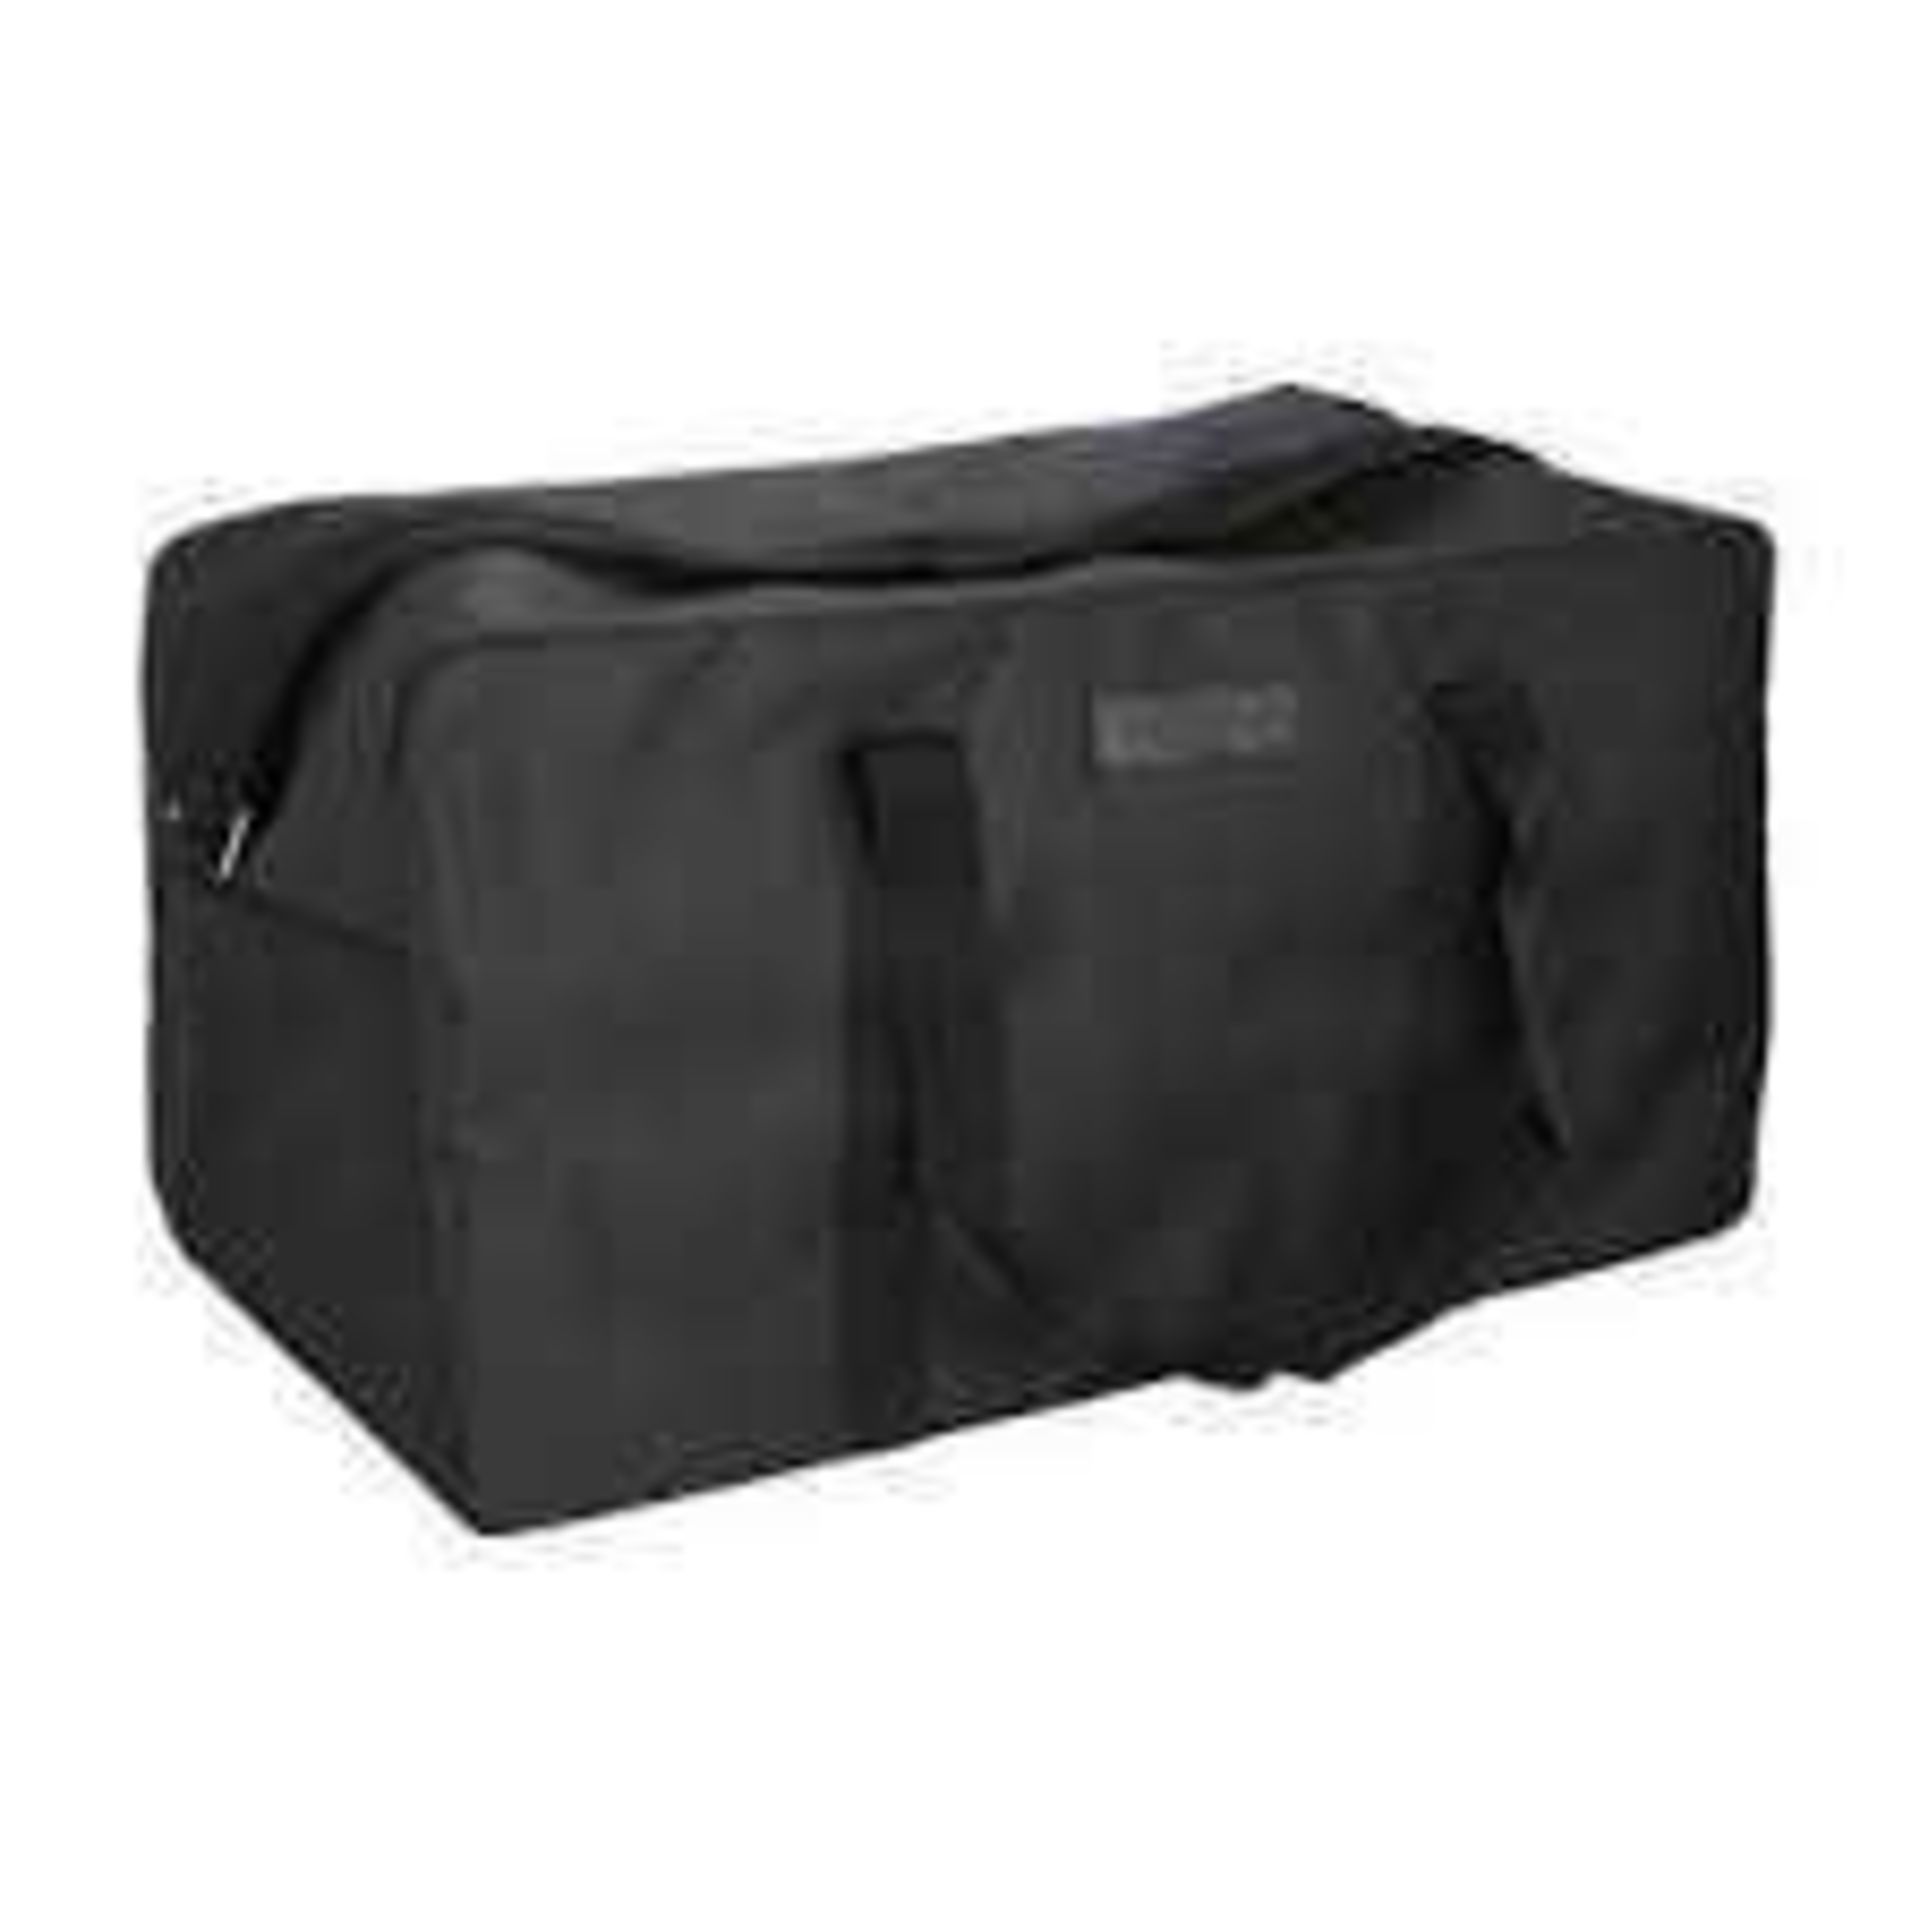 RRP £75 Each Brand New And Bagged Giorgio Armani Fragrance Travel Bag